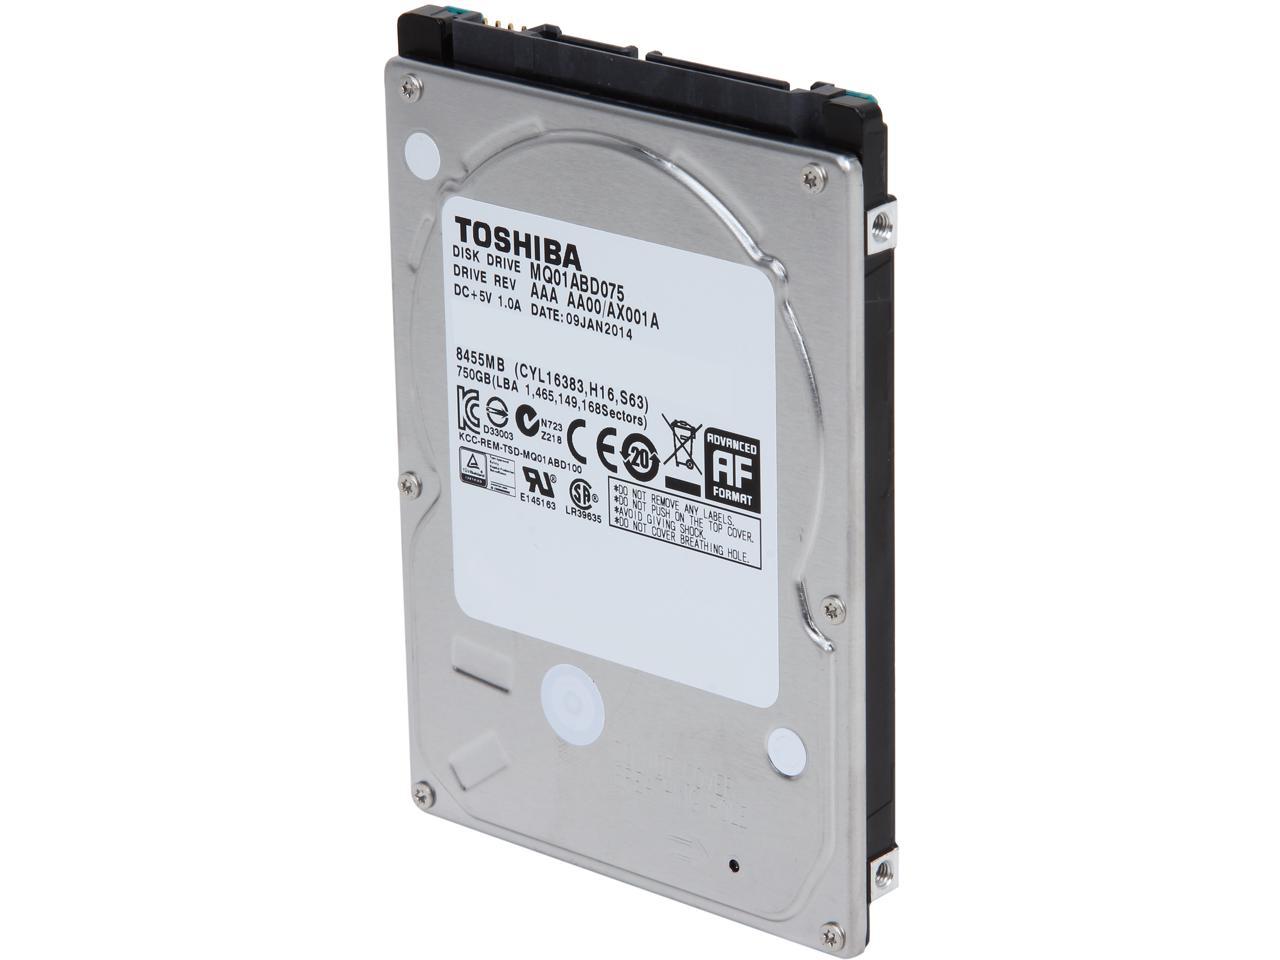 Toshiba Mq01Abd075 750Gb 5400 Rpm 8Mb Cache Sata 3.0Gb/S 2.5" Internal Notebook Hard Drive